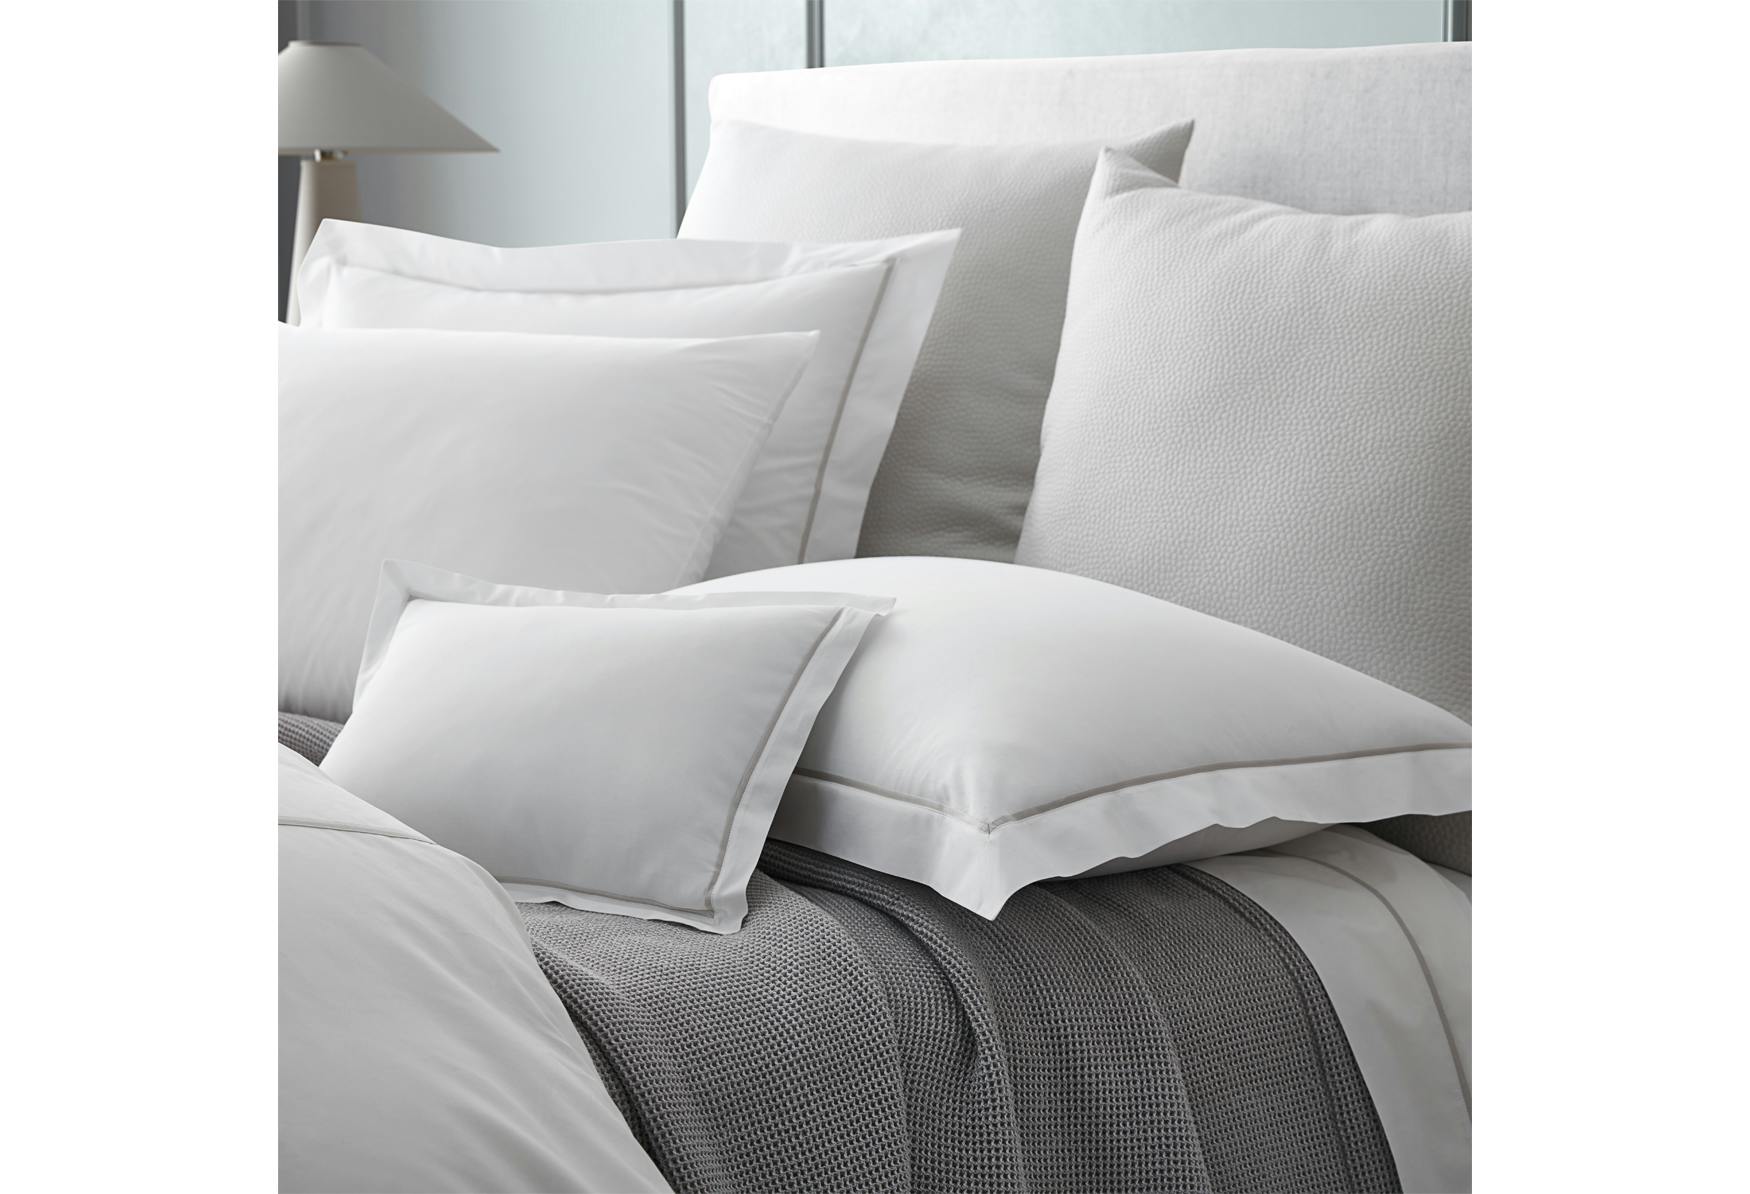 Details about   European Square Pillow Shams Set of 2 White 600 Thread Count 100% Natural Cotton 